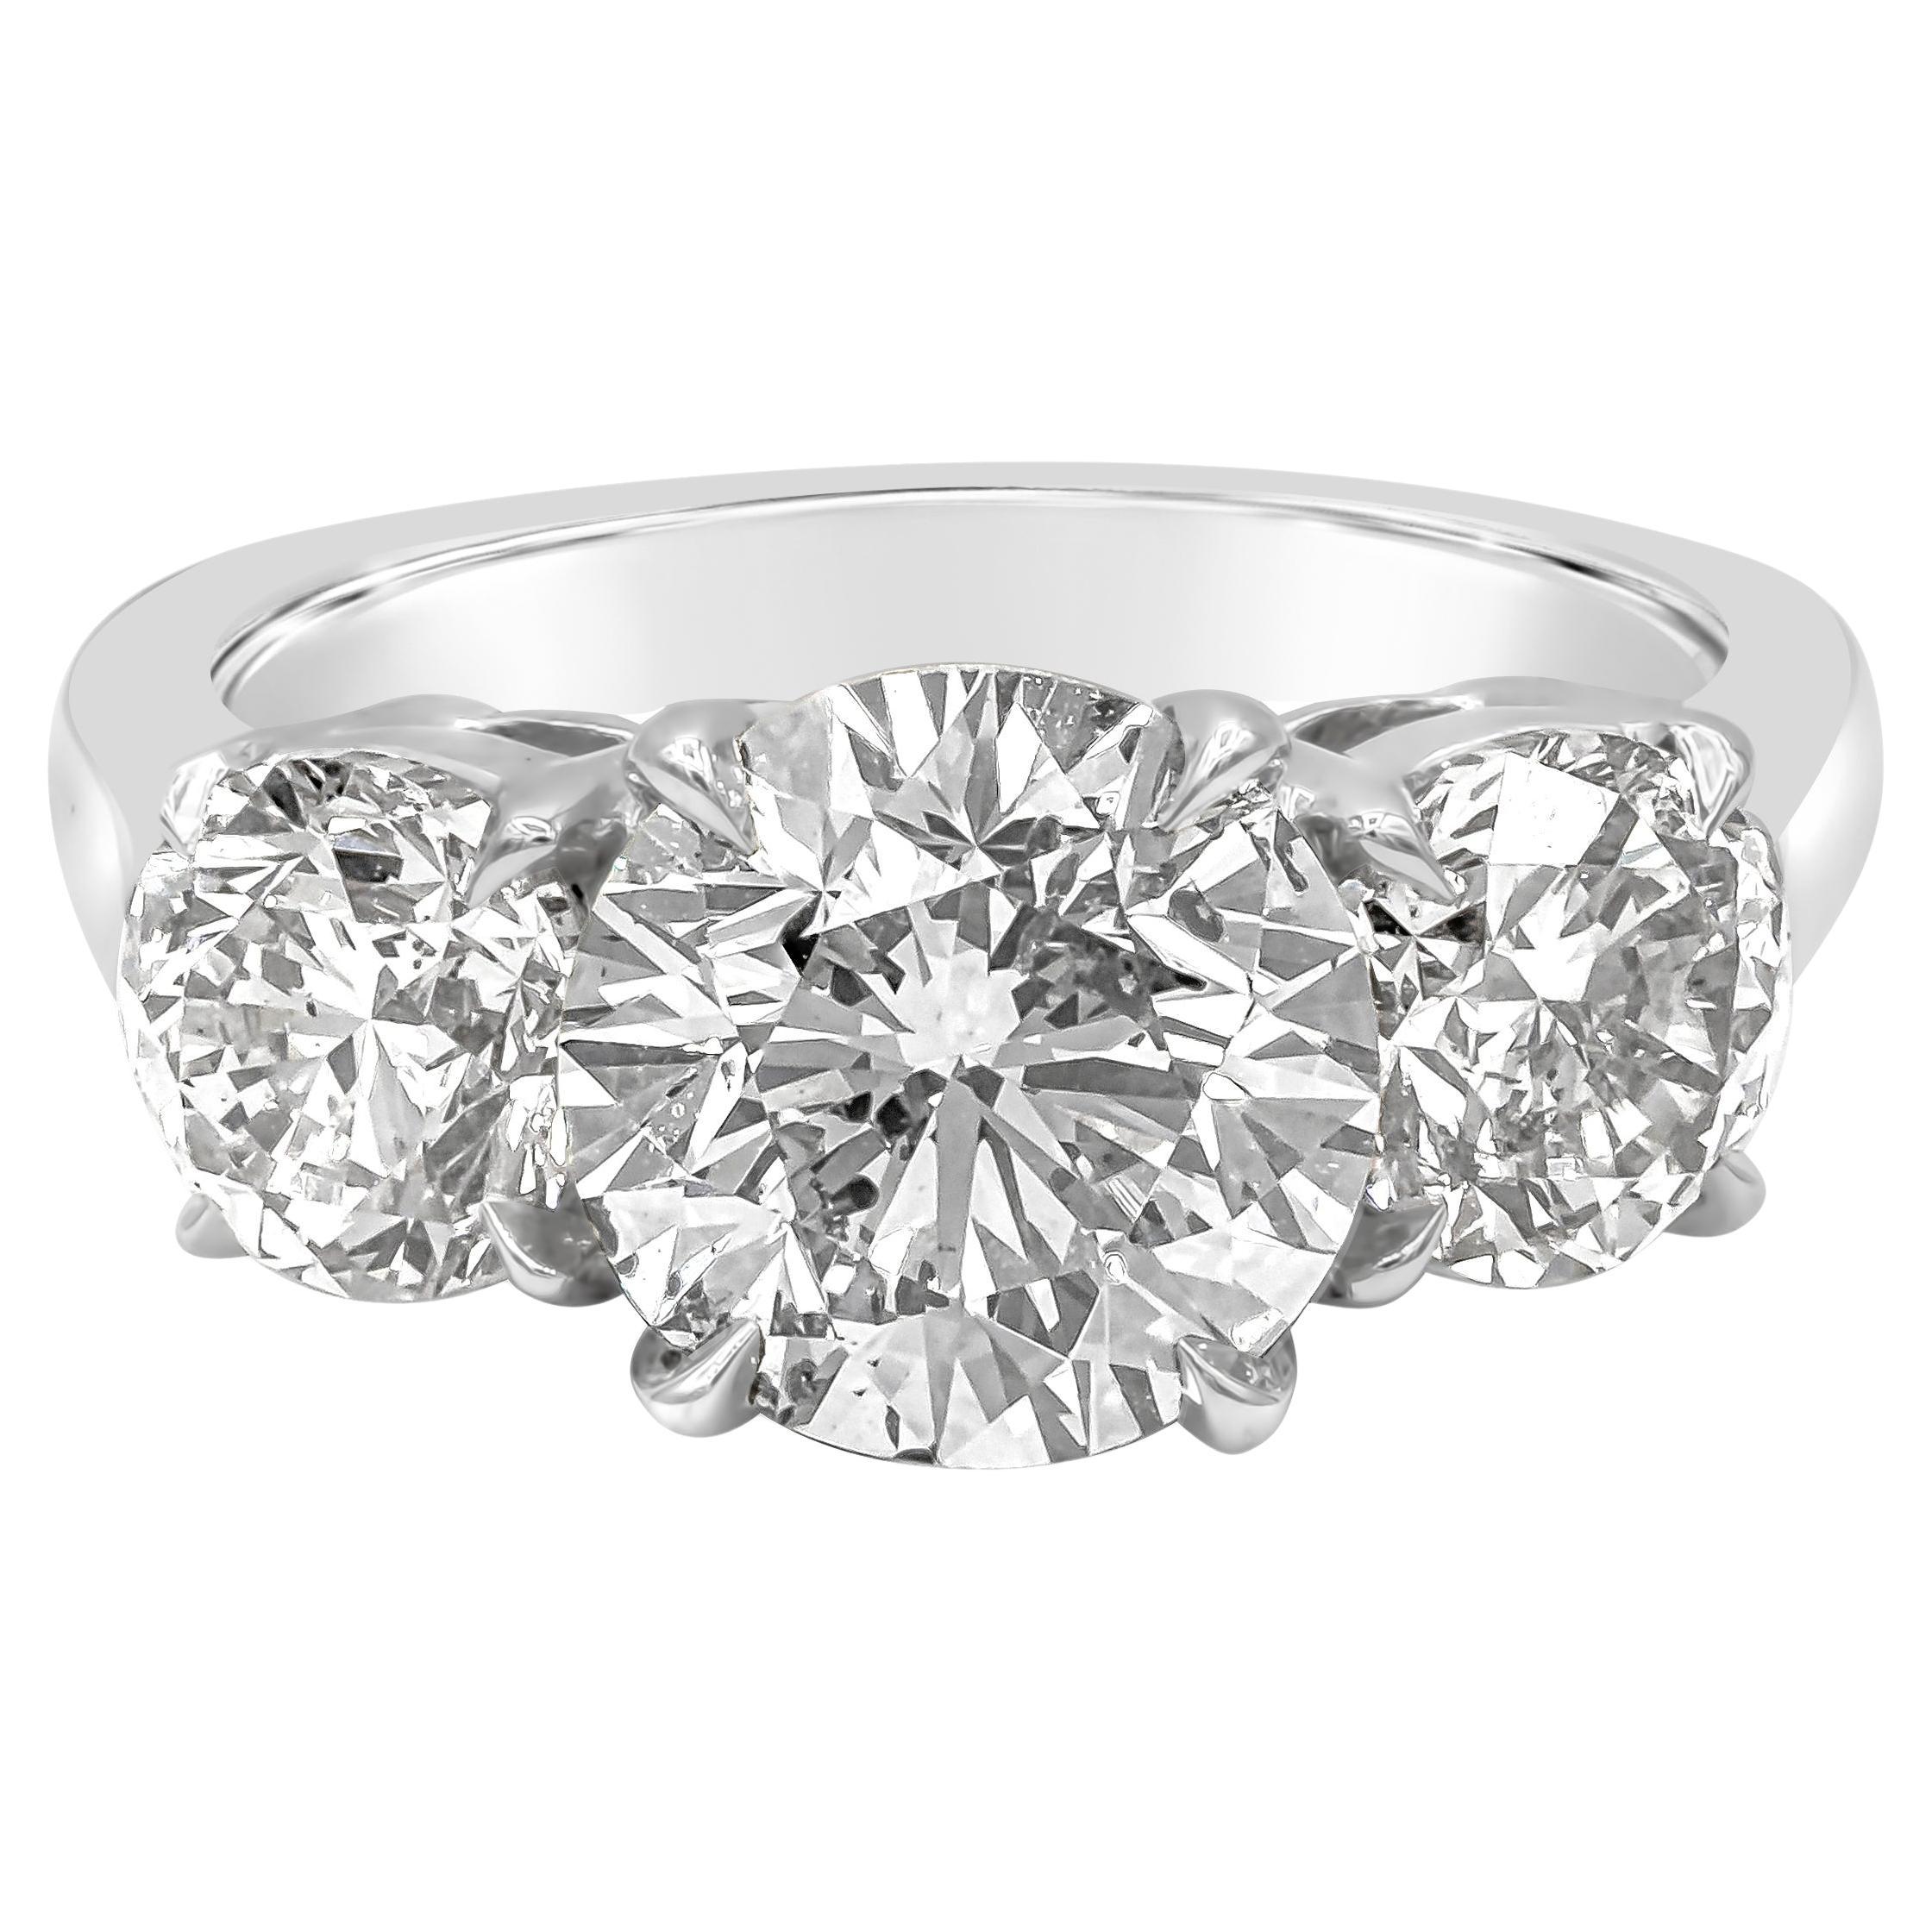 4.71 Carats Total Round Cut Diamond Three-Stone Engagement Ring